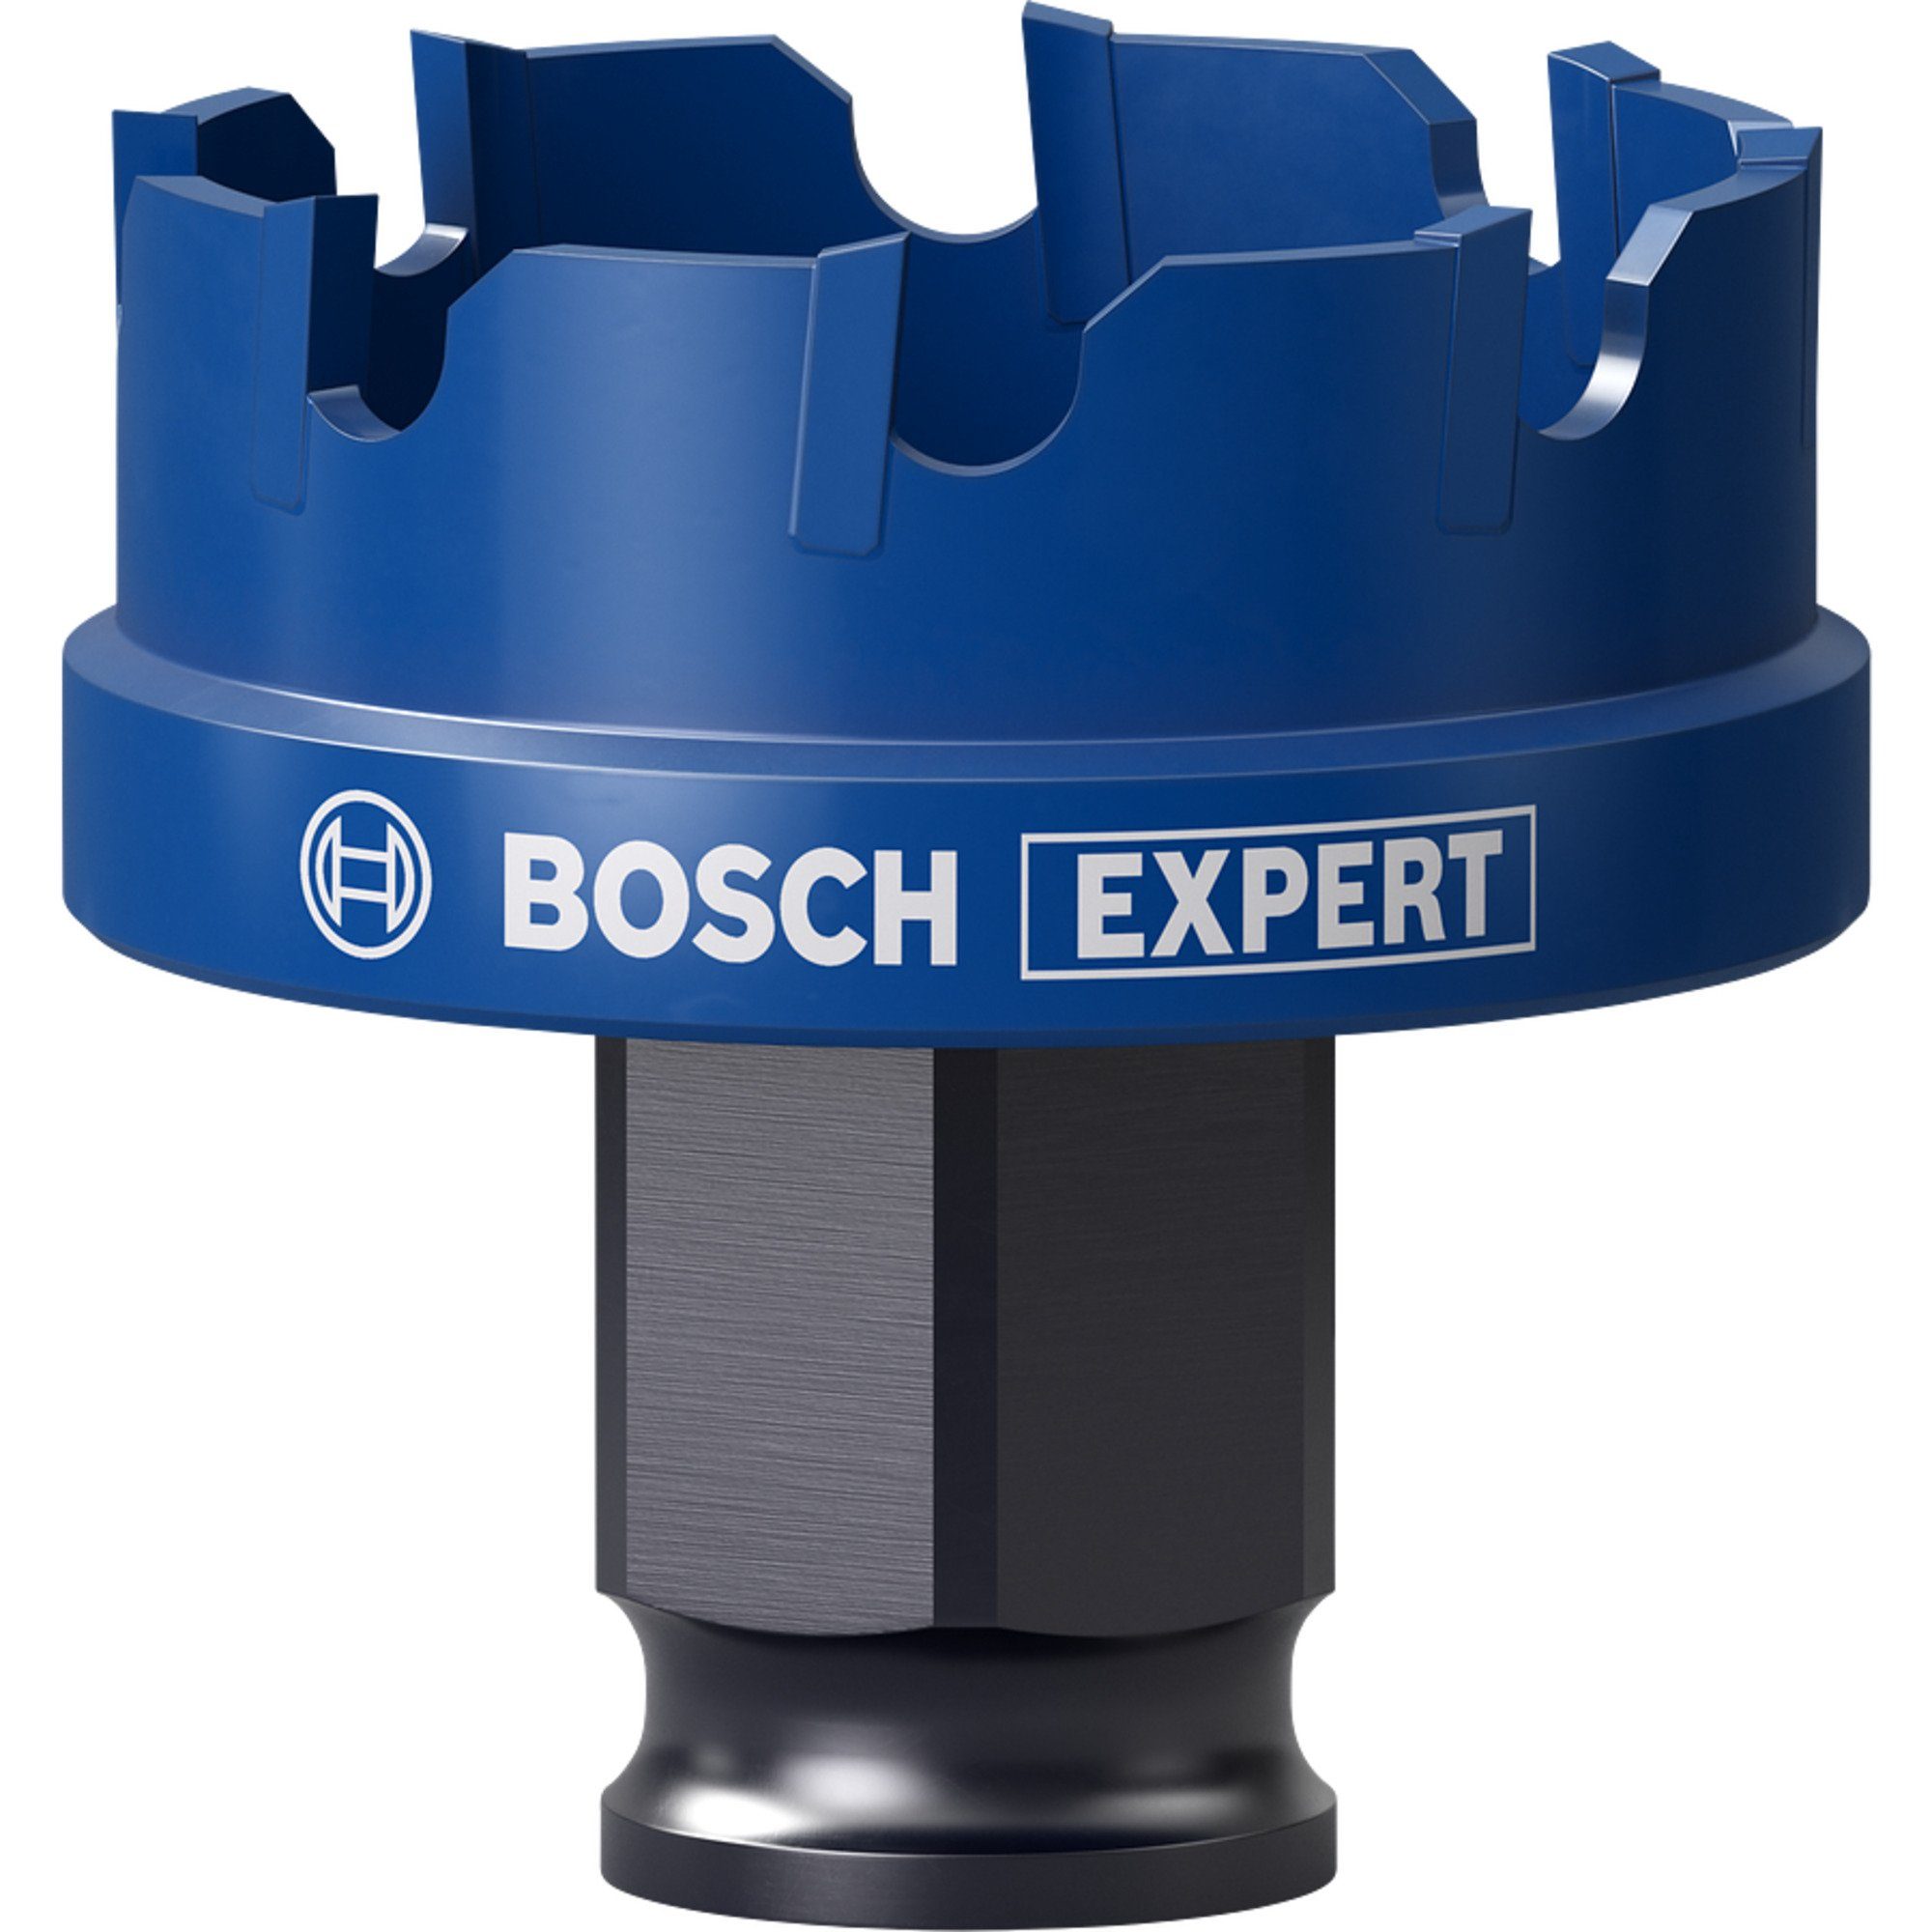 BOSCH Bosch Carbide Lochsäge Sägeblatt Professional Expert